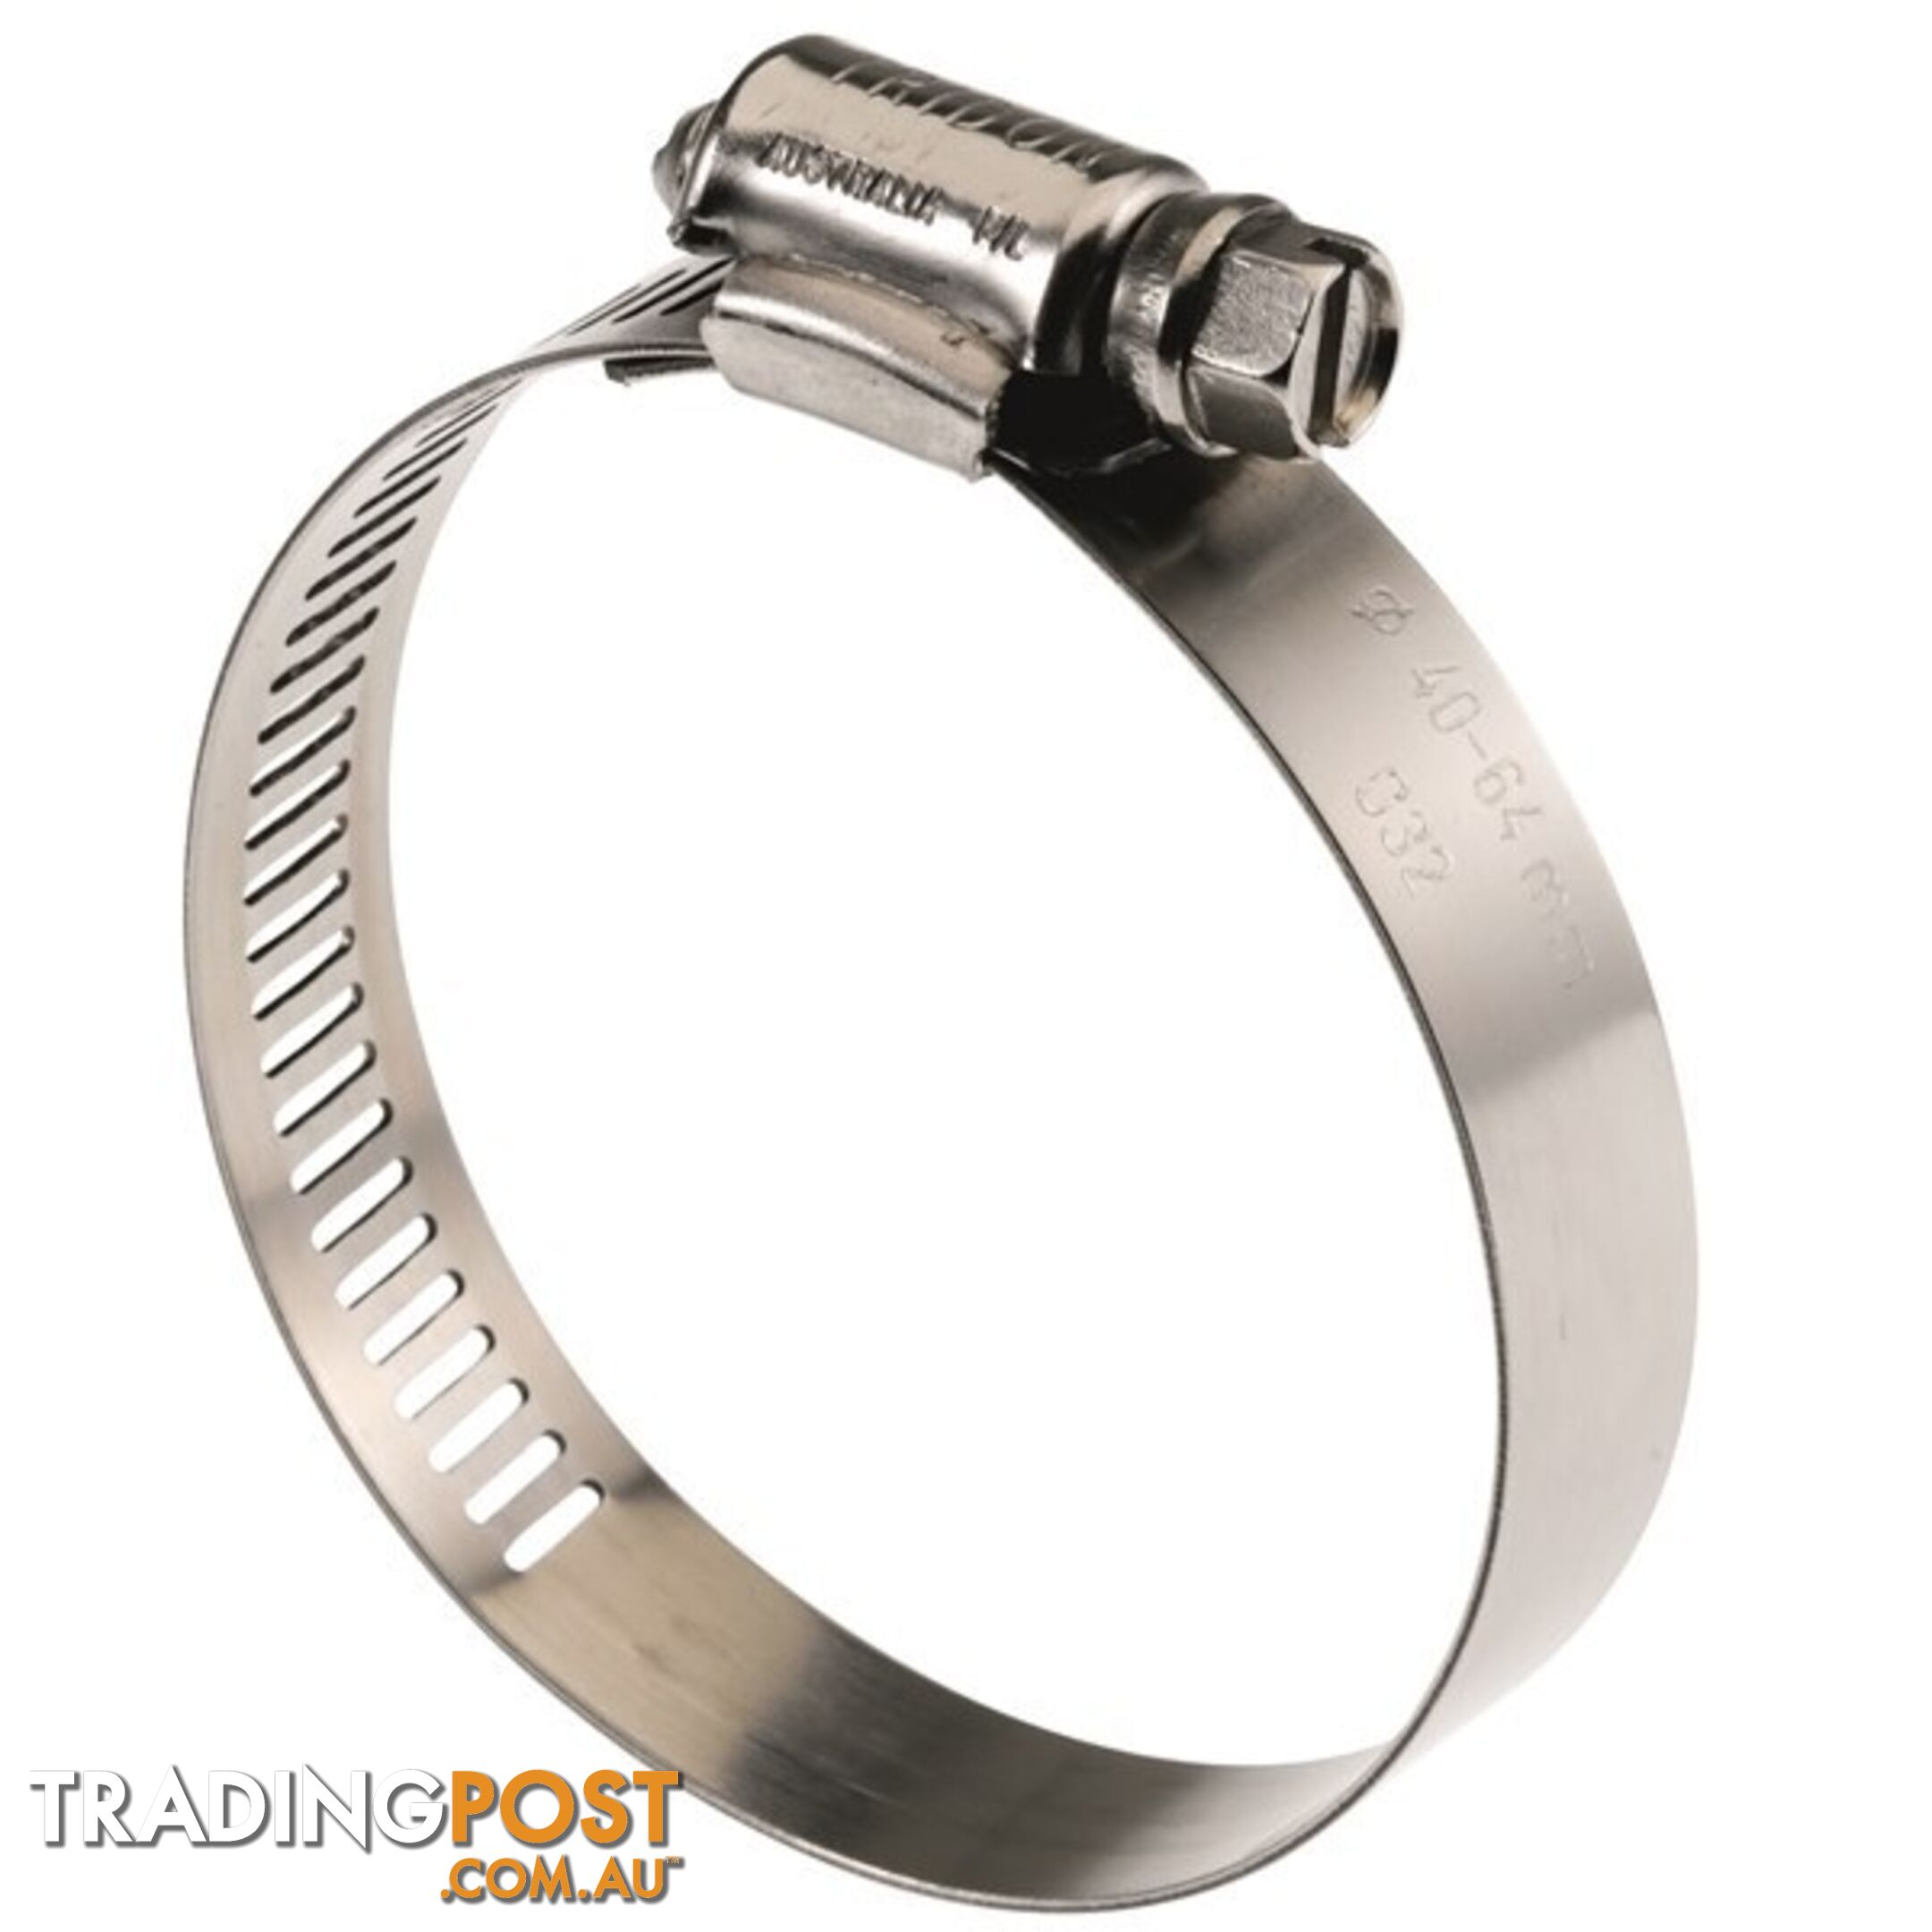 Tridon Full S. Steel Hose Clamps 206mm â 251mm Perforated Band 10pk SKU - HAS152